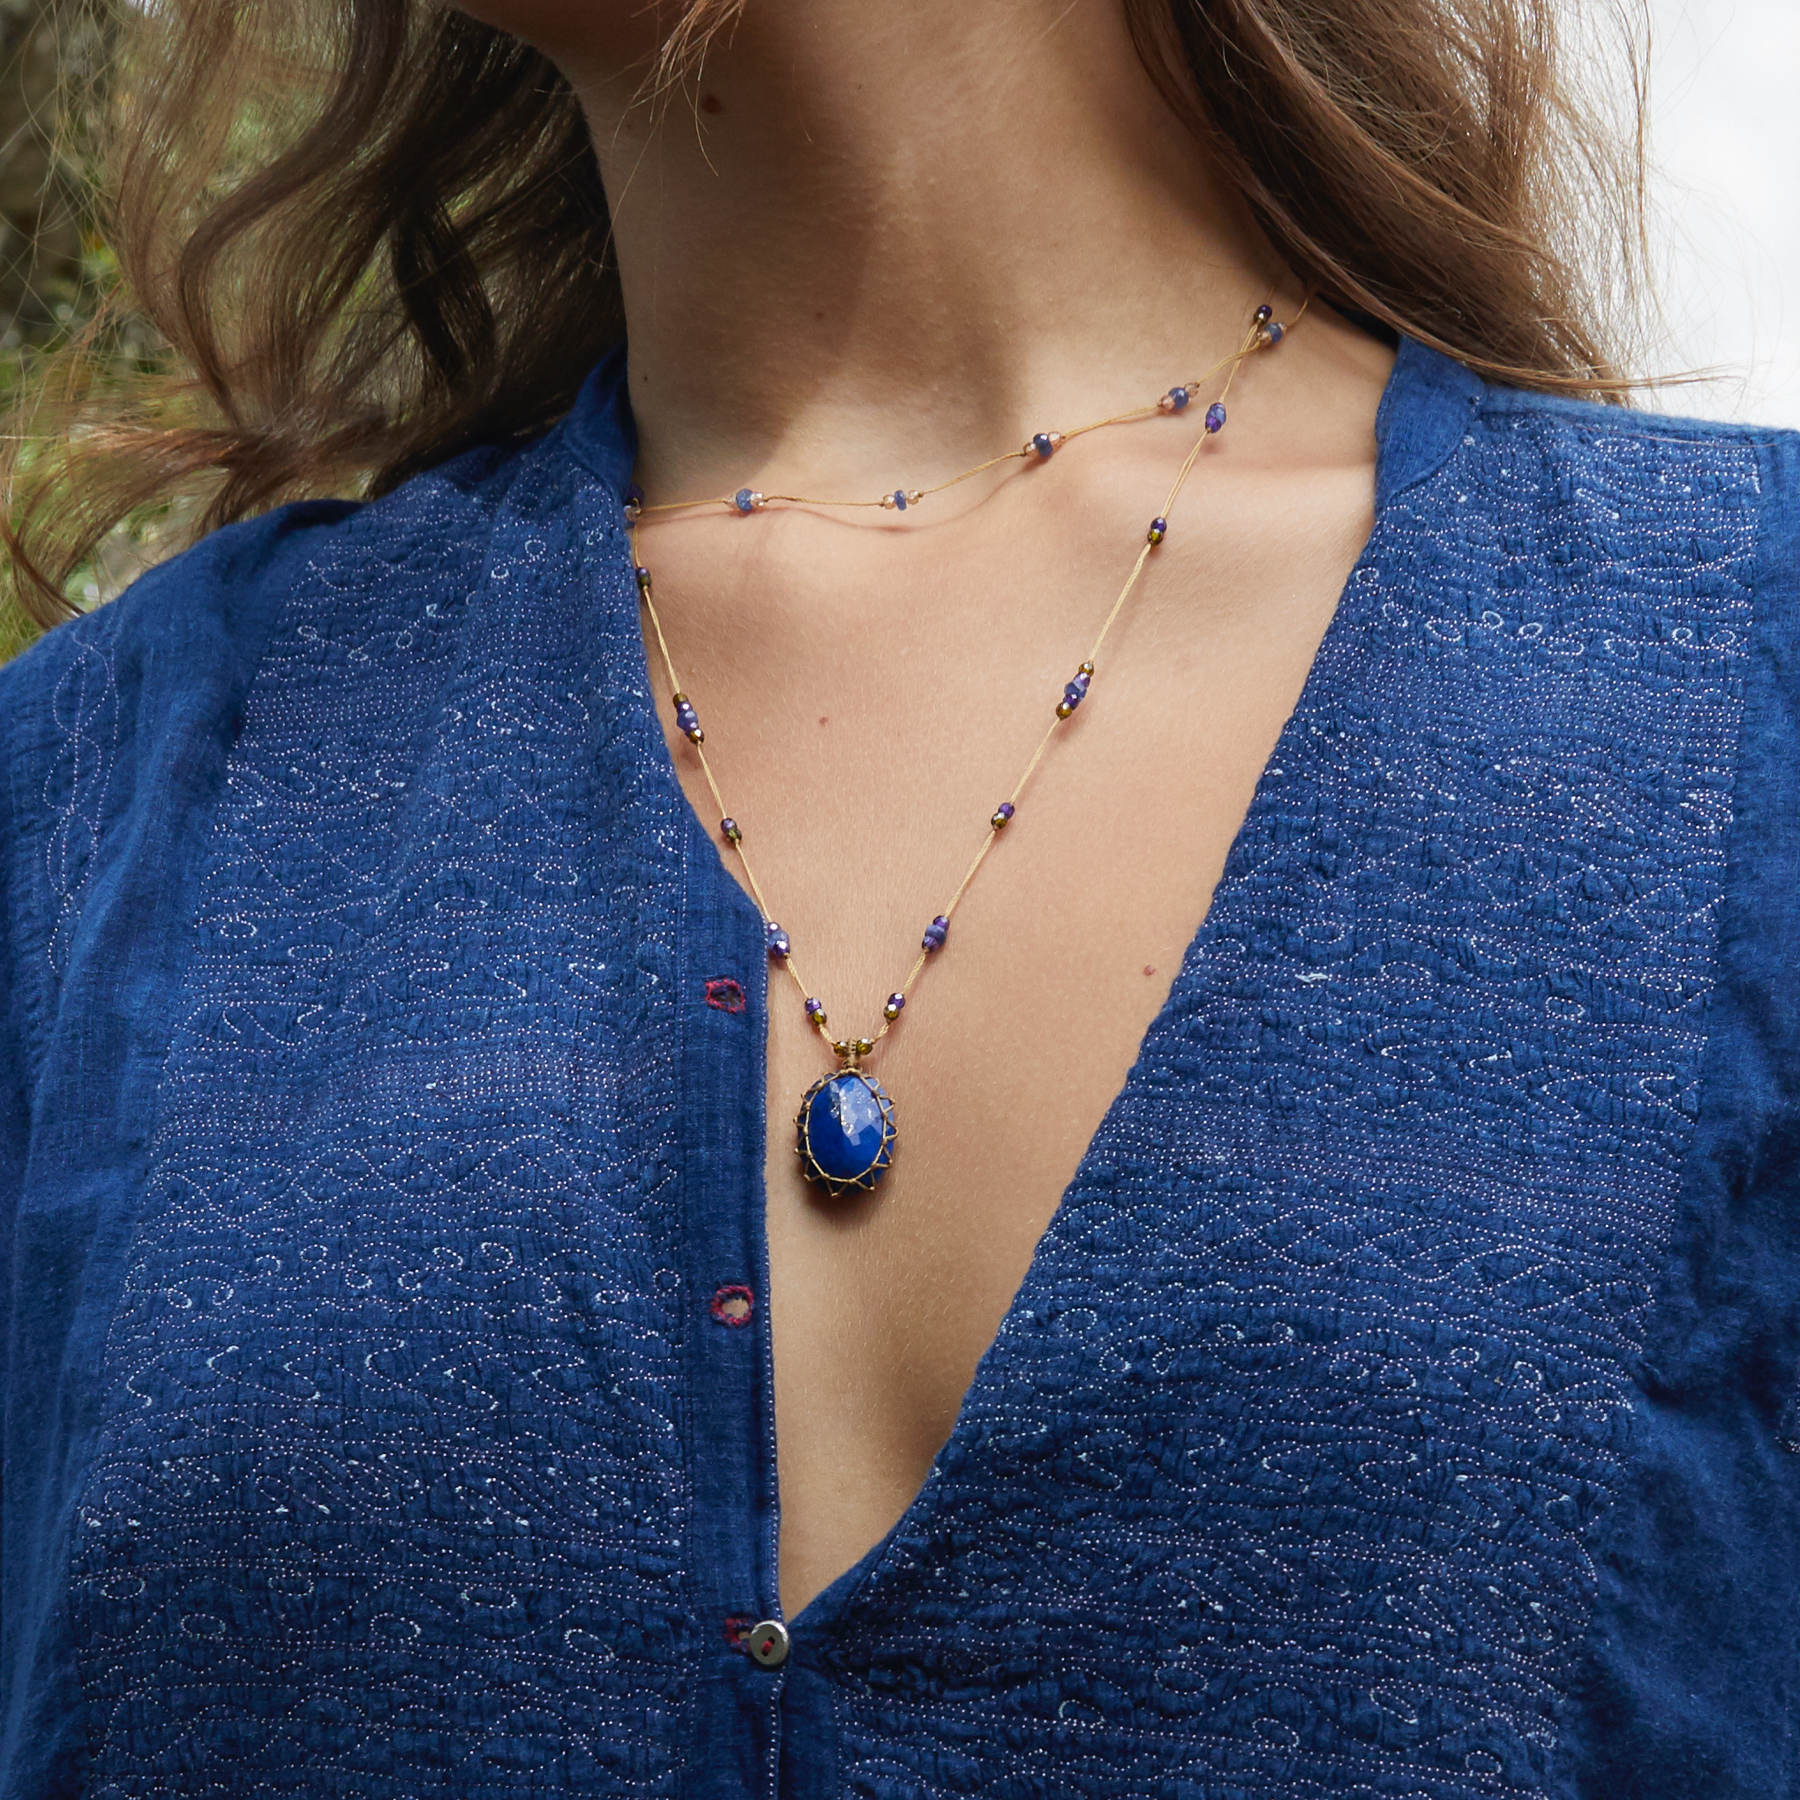 Tibetan Short Necklace - Lapis Lazuli - Mix Tsavorite - Beige Thread